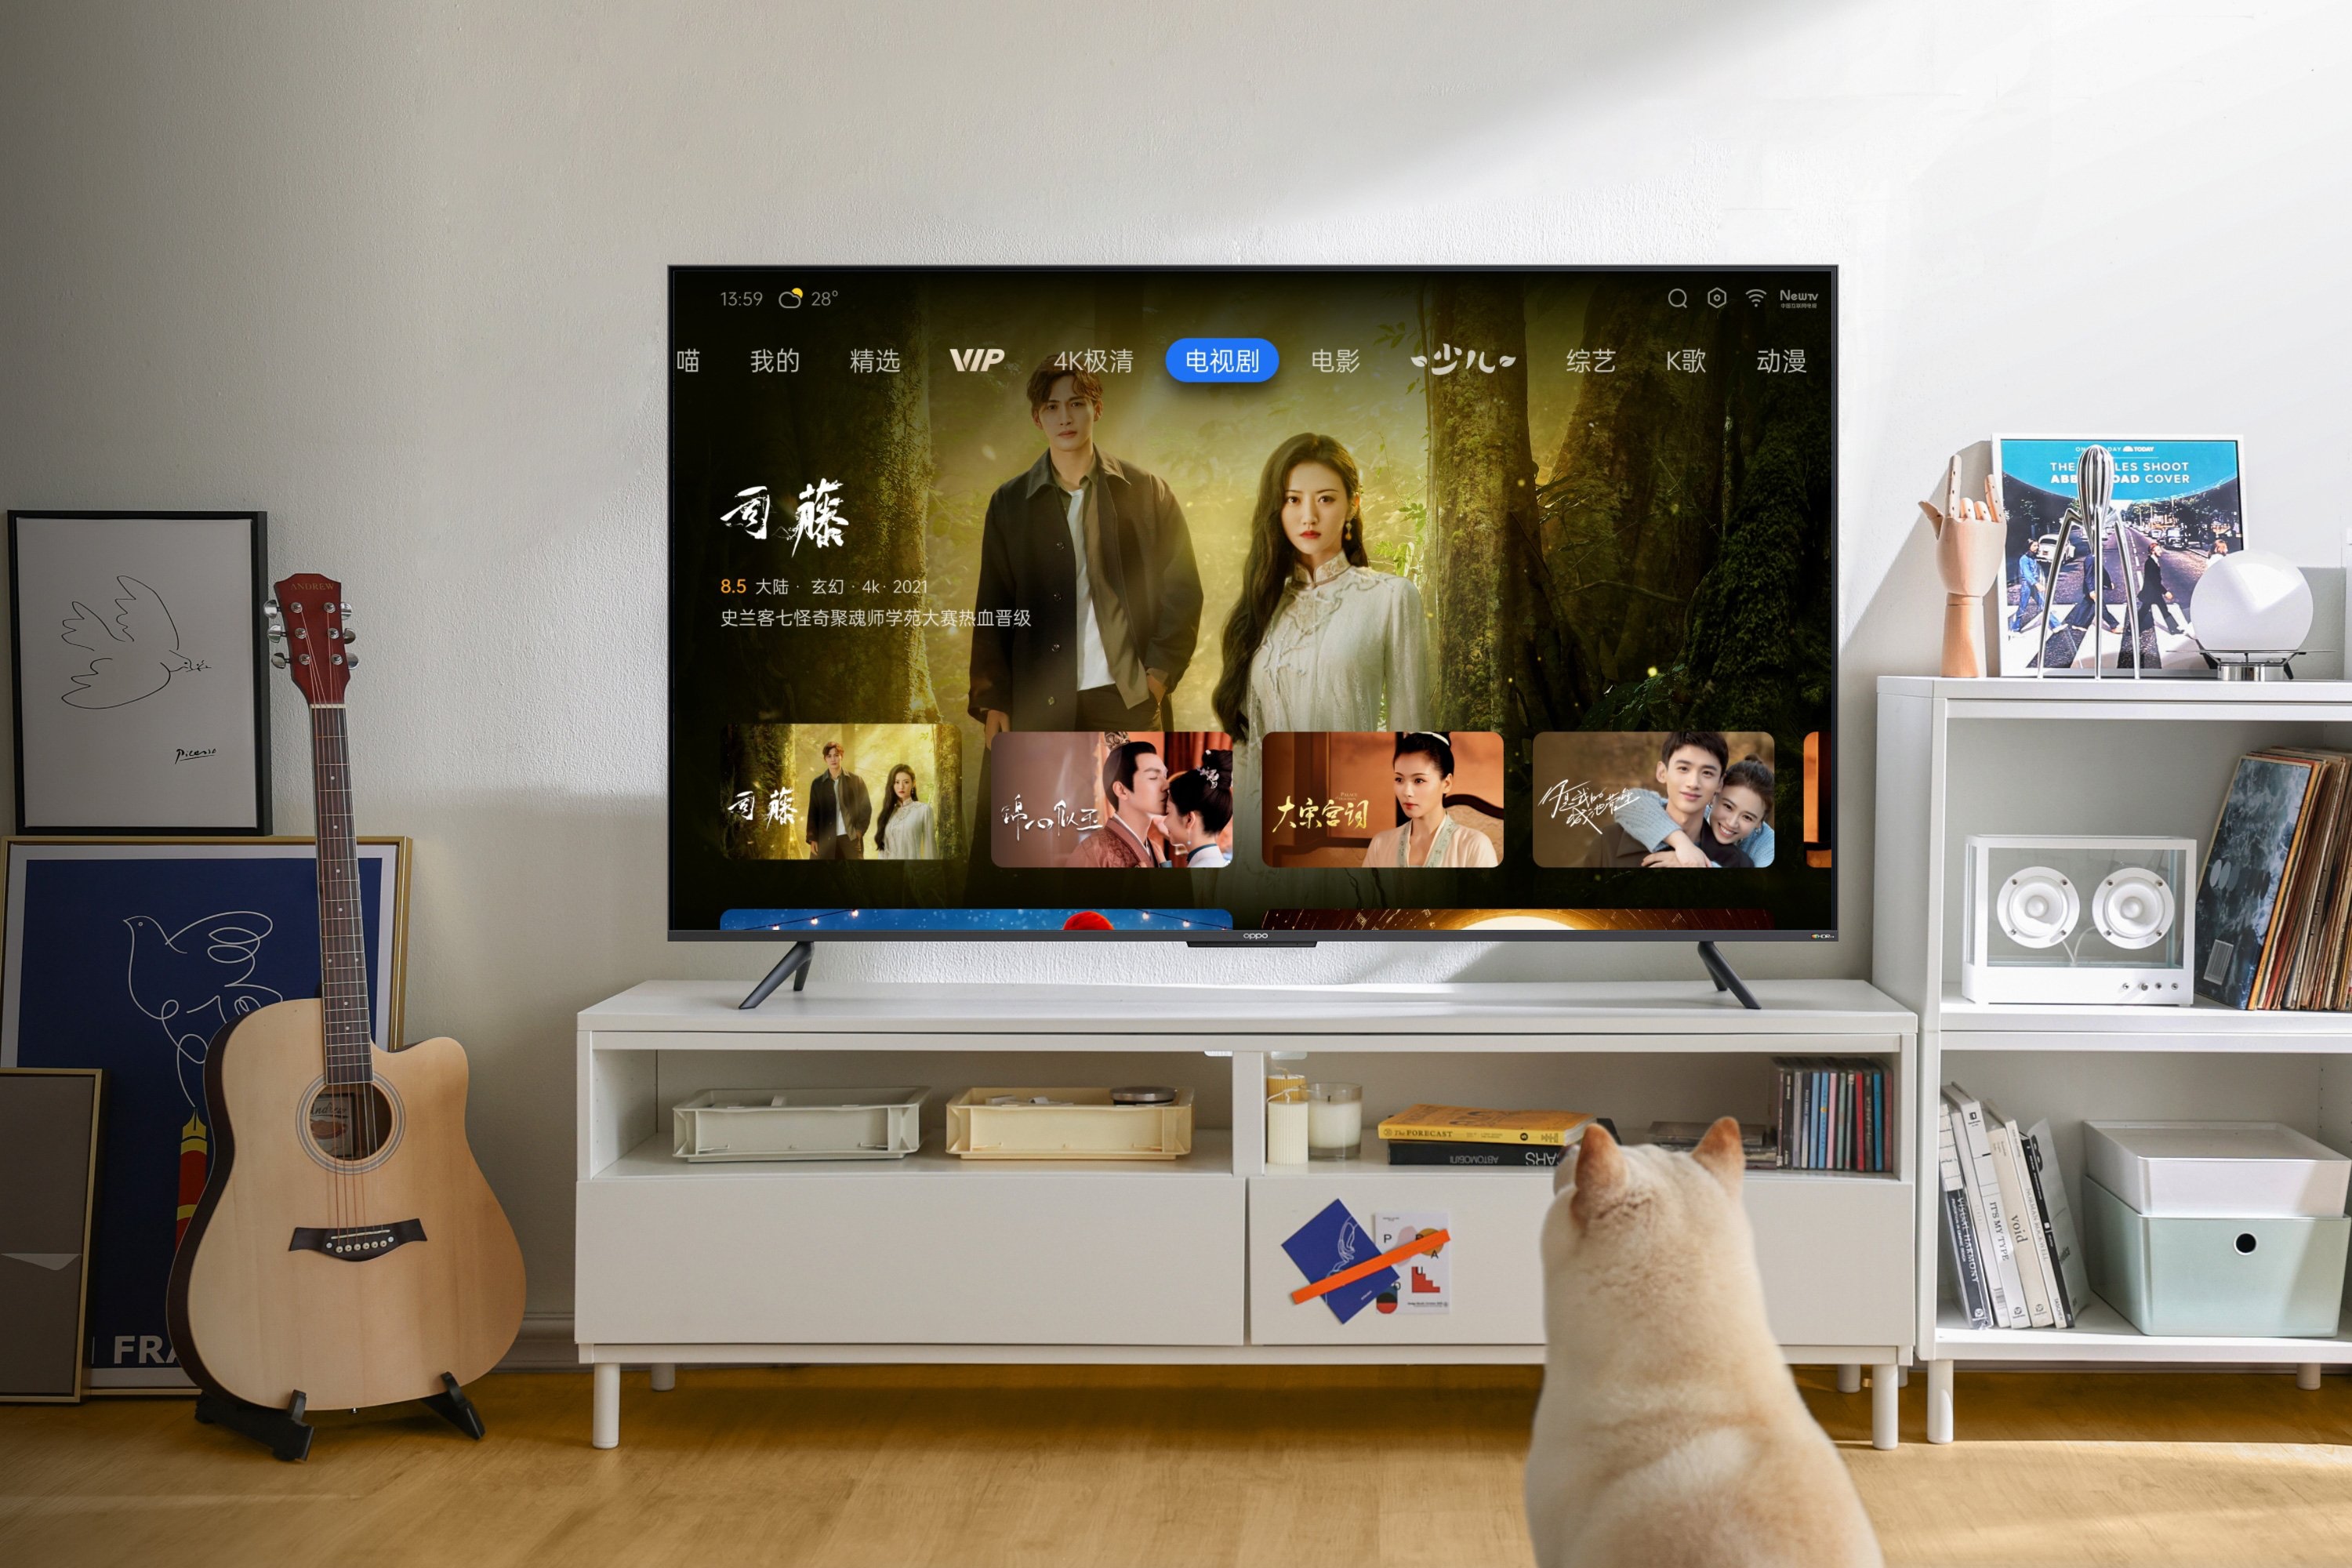 OPPO starts selling 65-inch 4K Smart TV K9x for $335